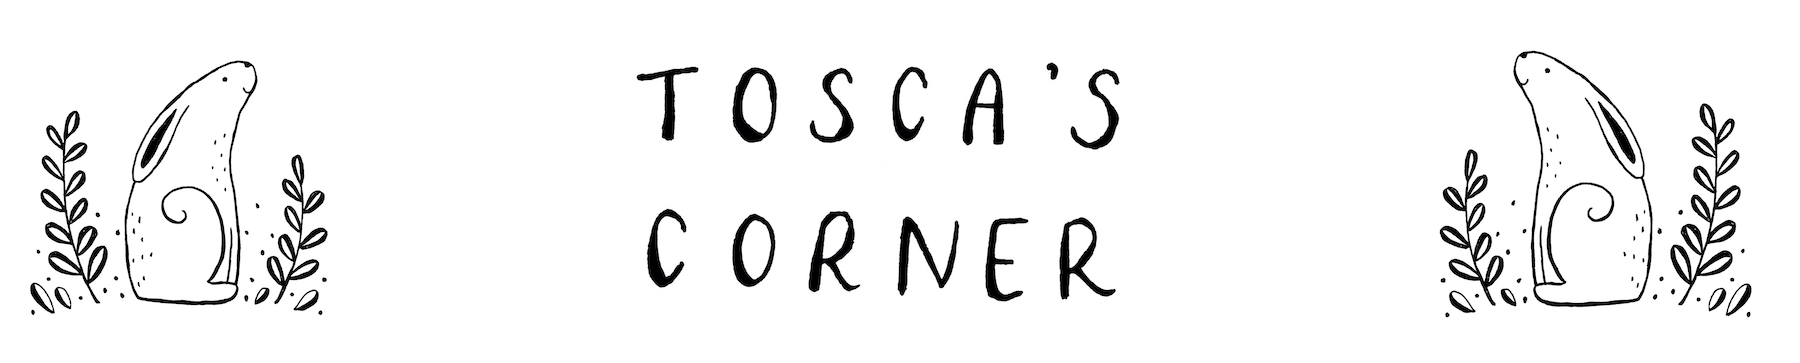 Tosca's Corner